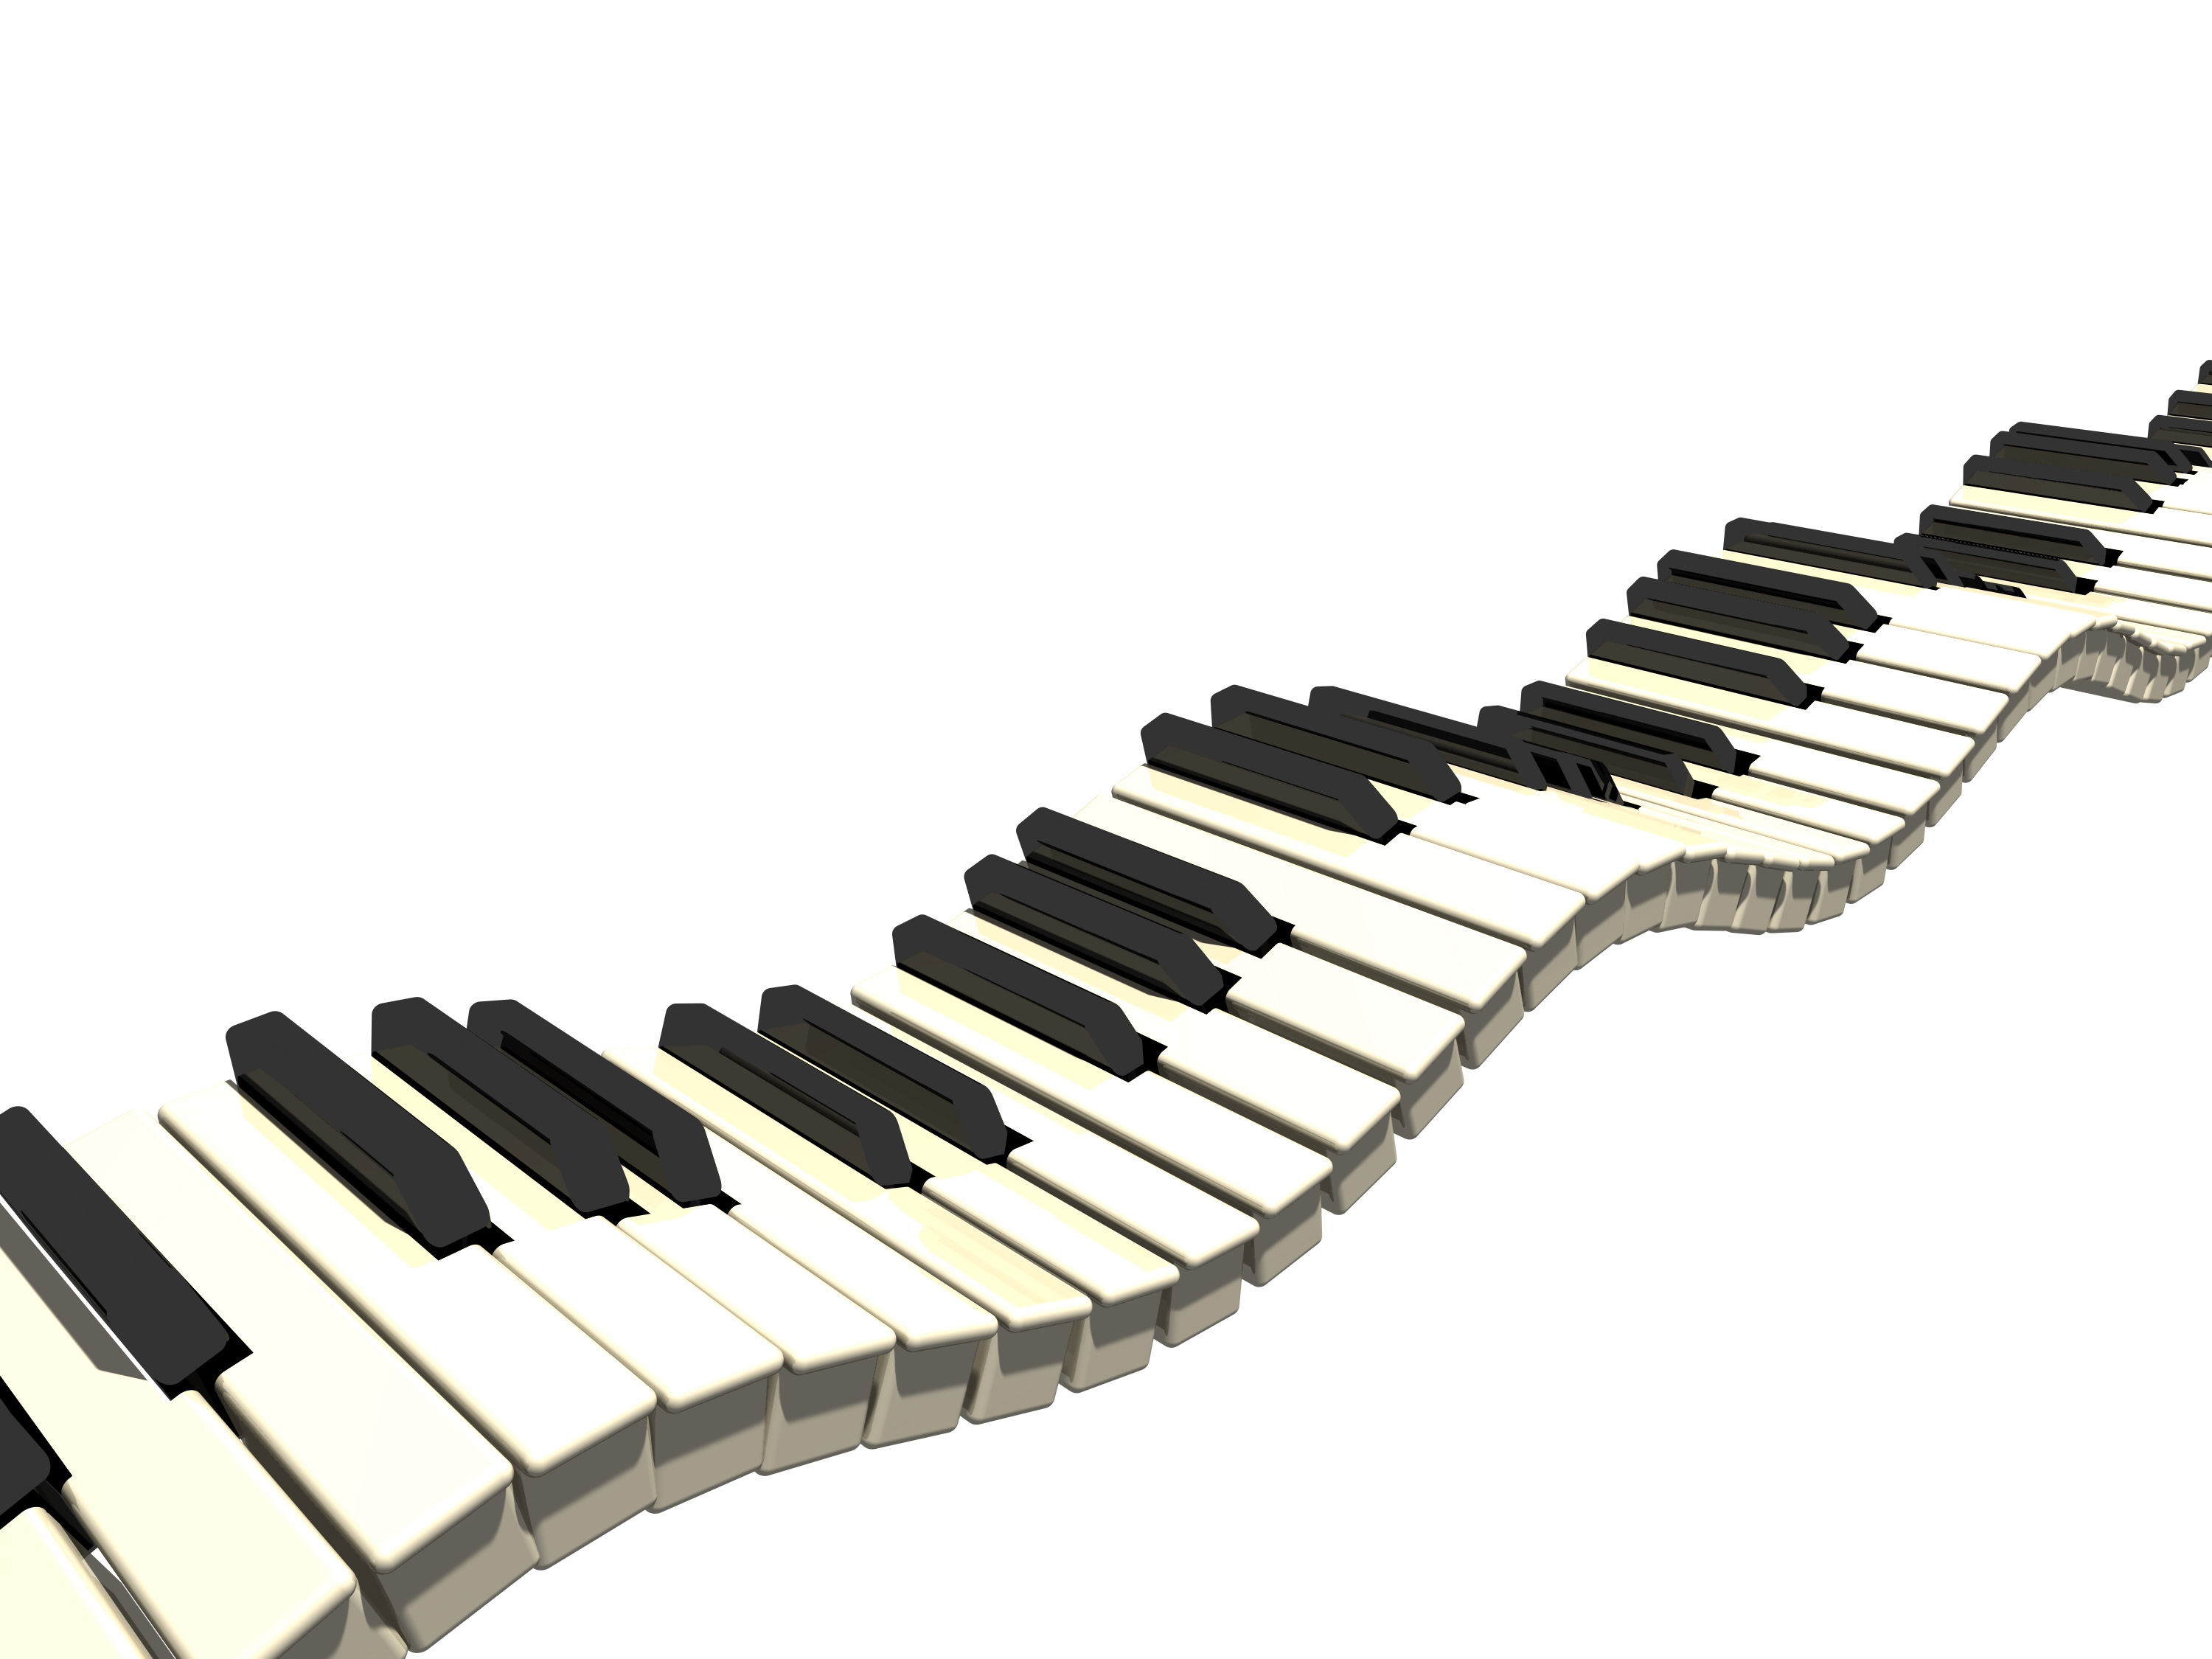 Piano ten key keyboard clipart